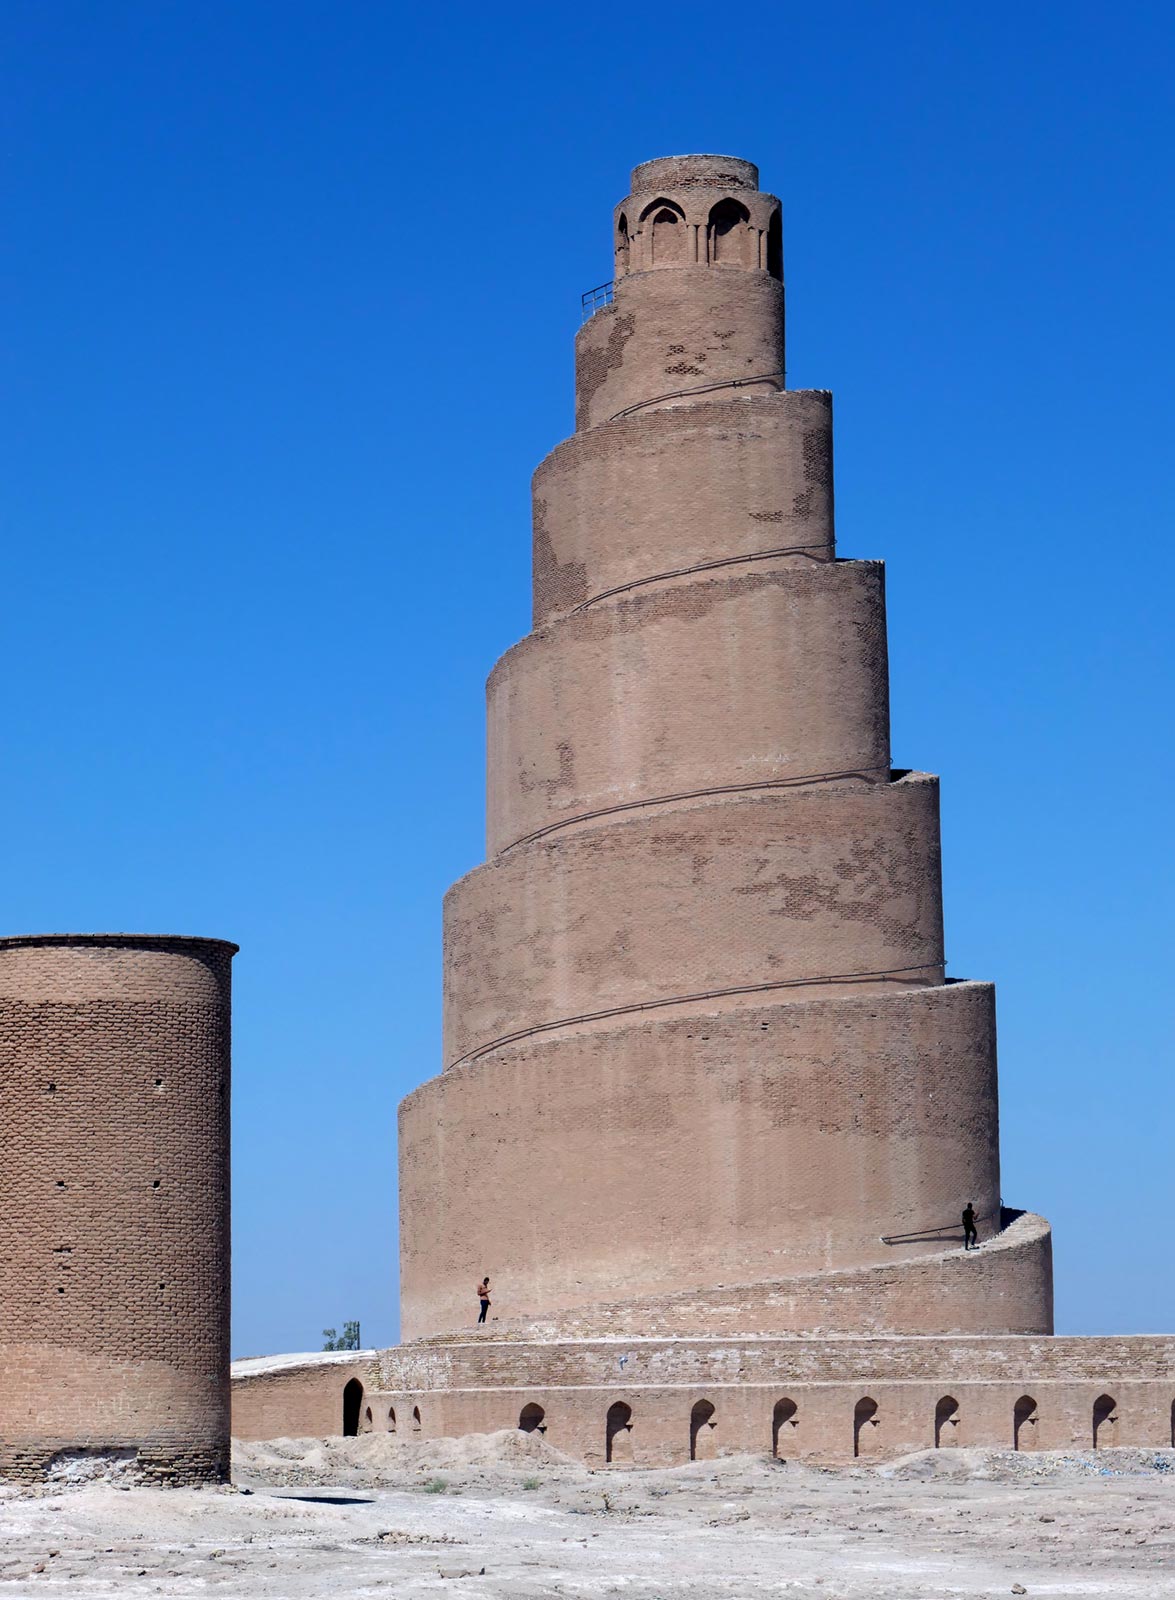 Minarete de la Gran Mezquita de Samarra